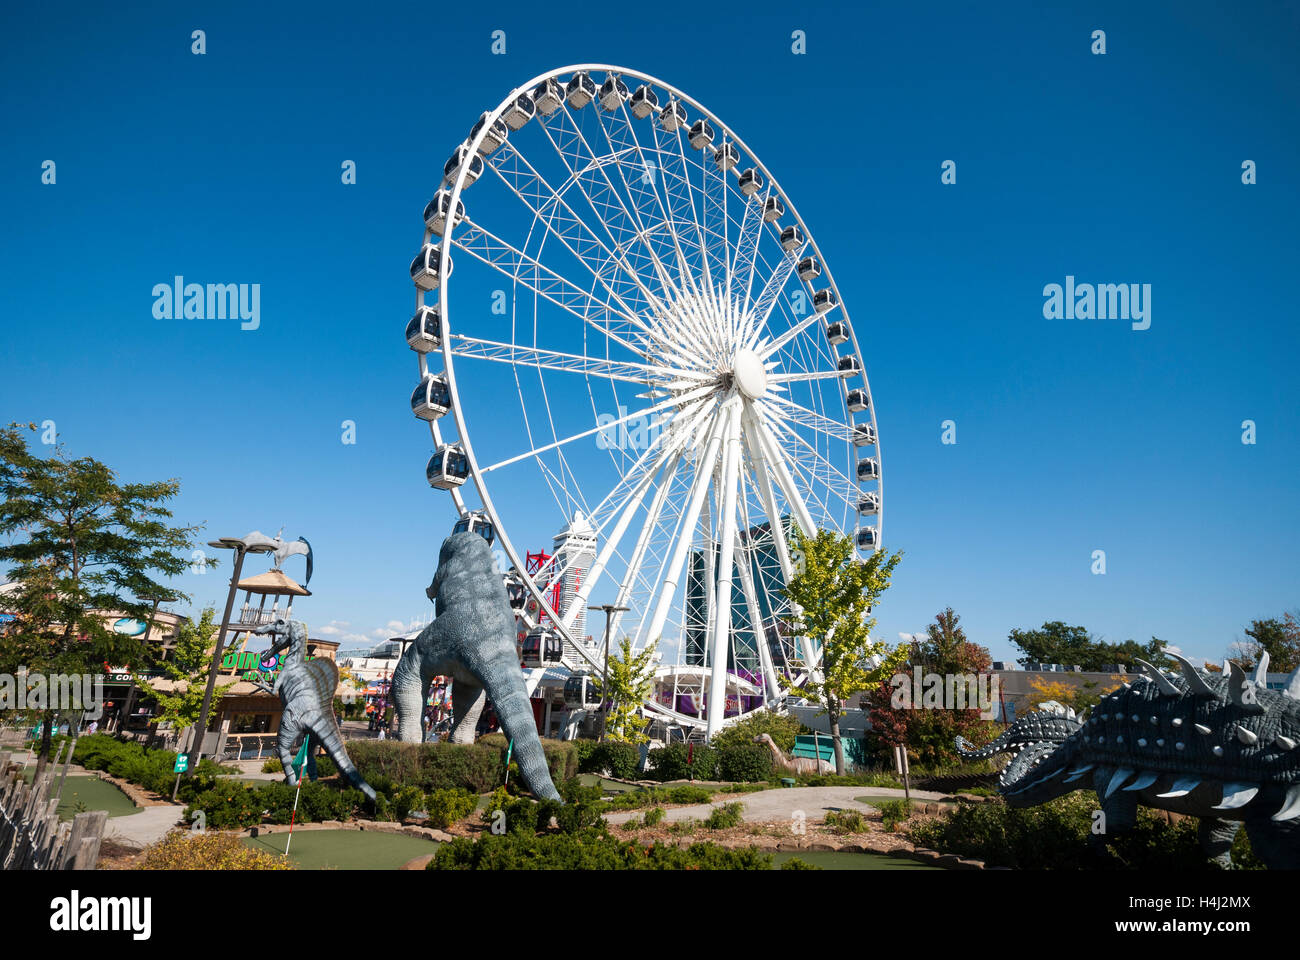 The Skywheel seen next to Dinosaur Adventure Golf a 70,000 sq foot dinosaur themed mini golf attraction in Niagara Falls Canada Stock Photo